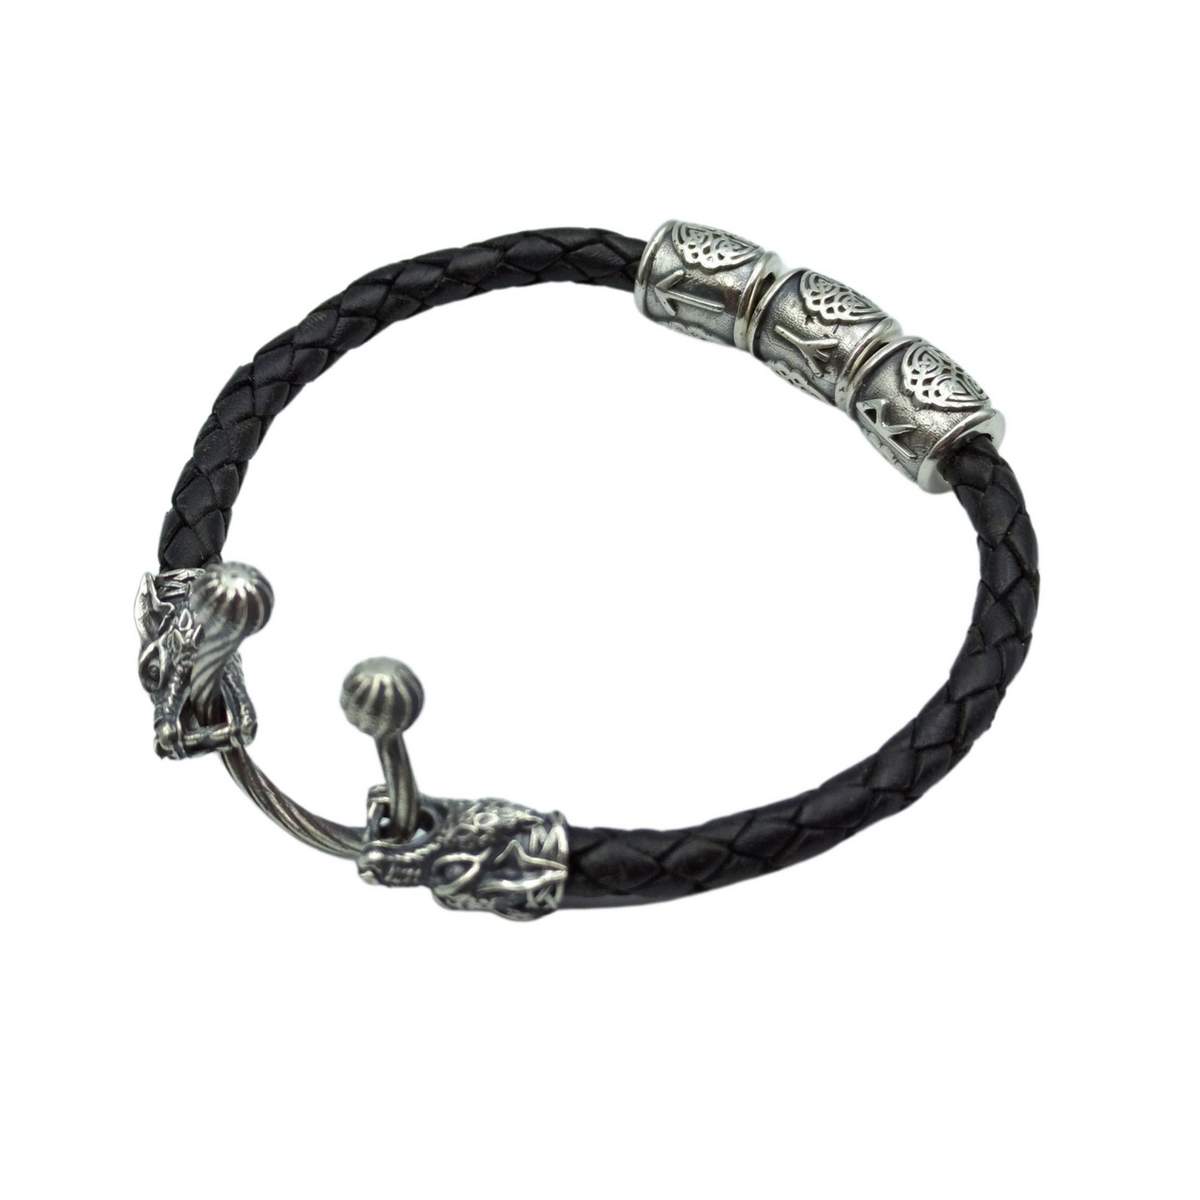 Tyr wolf leather bracelet 6 inch | 15 Cm Silver 925 